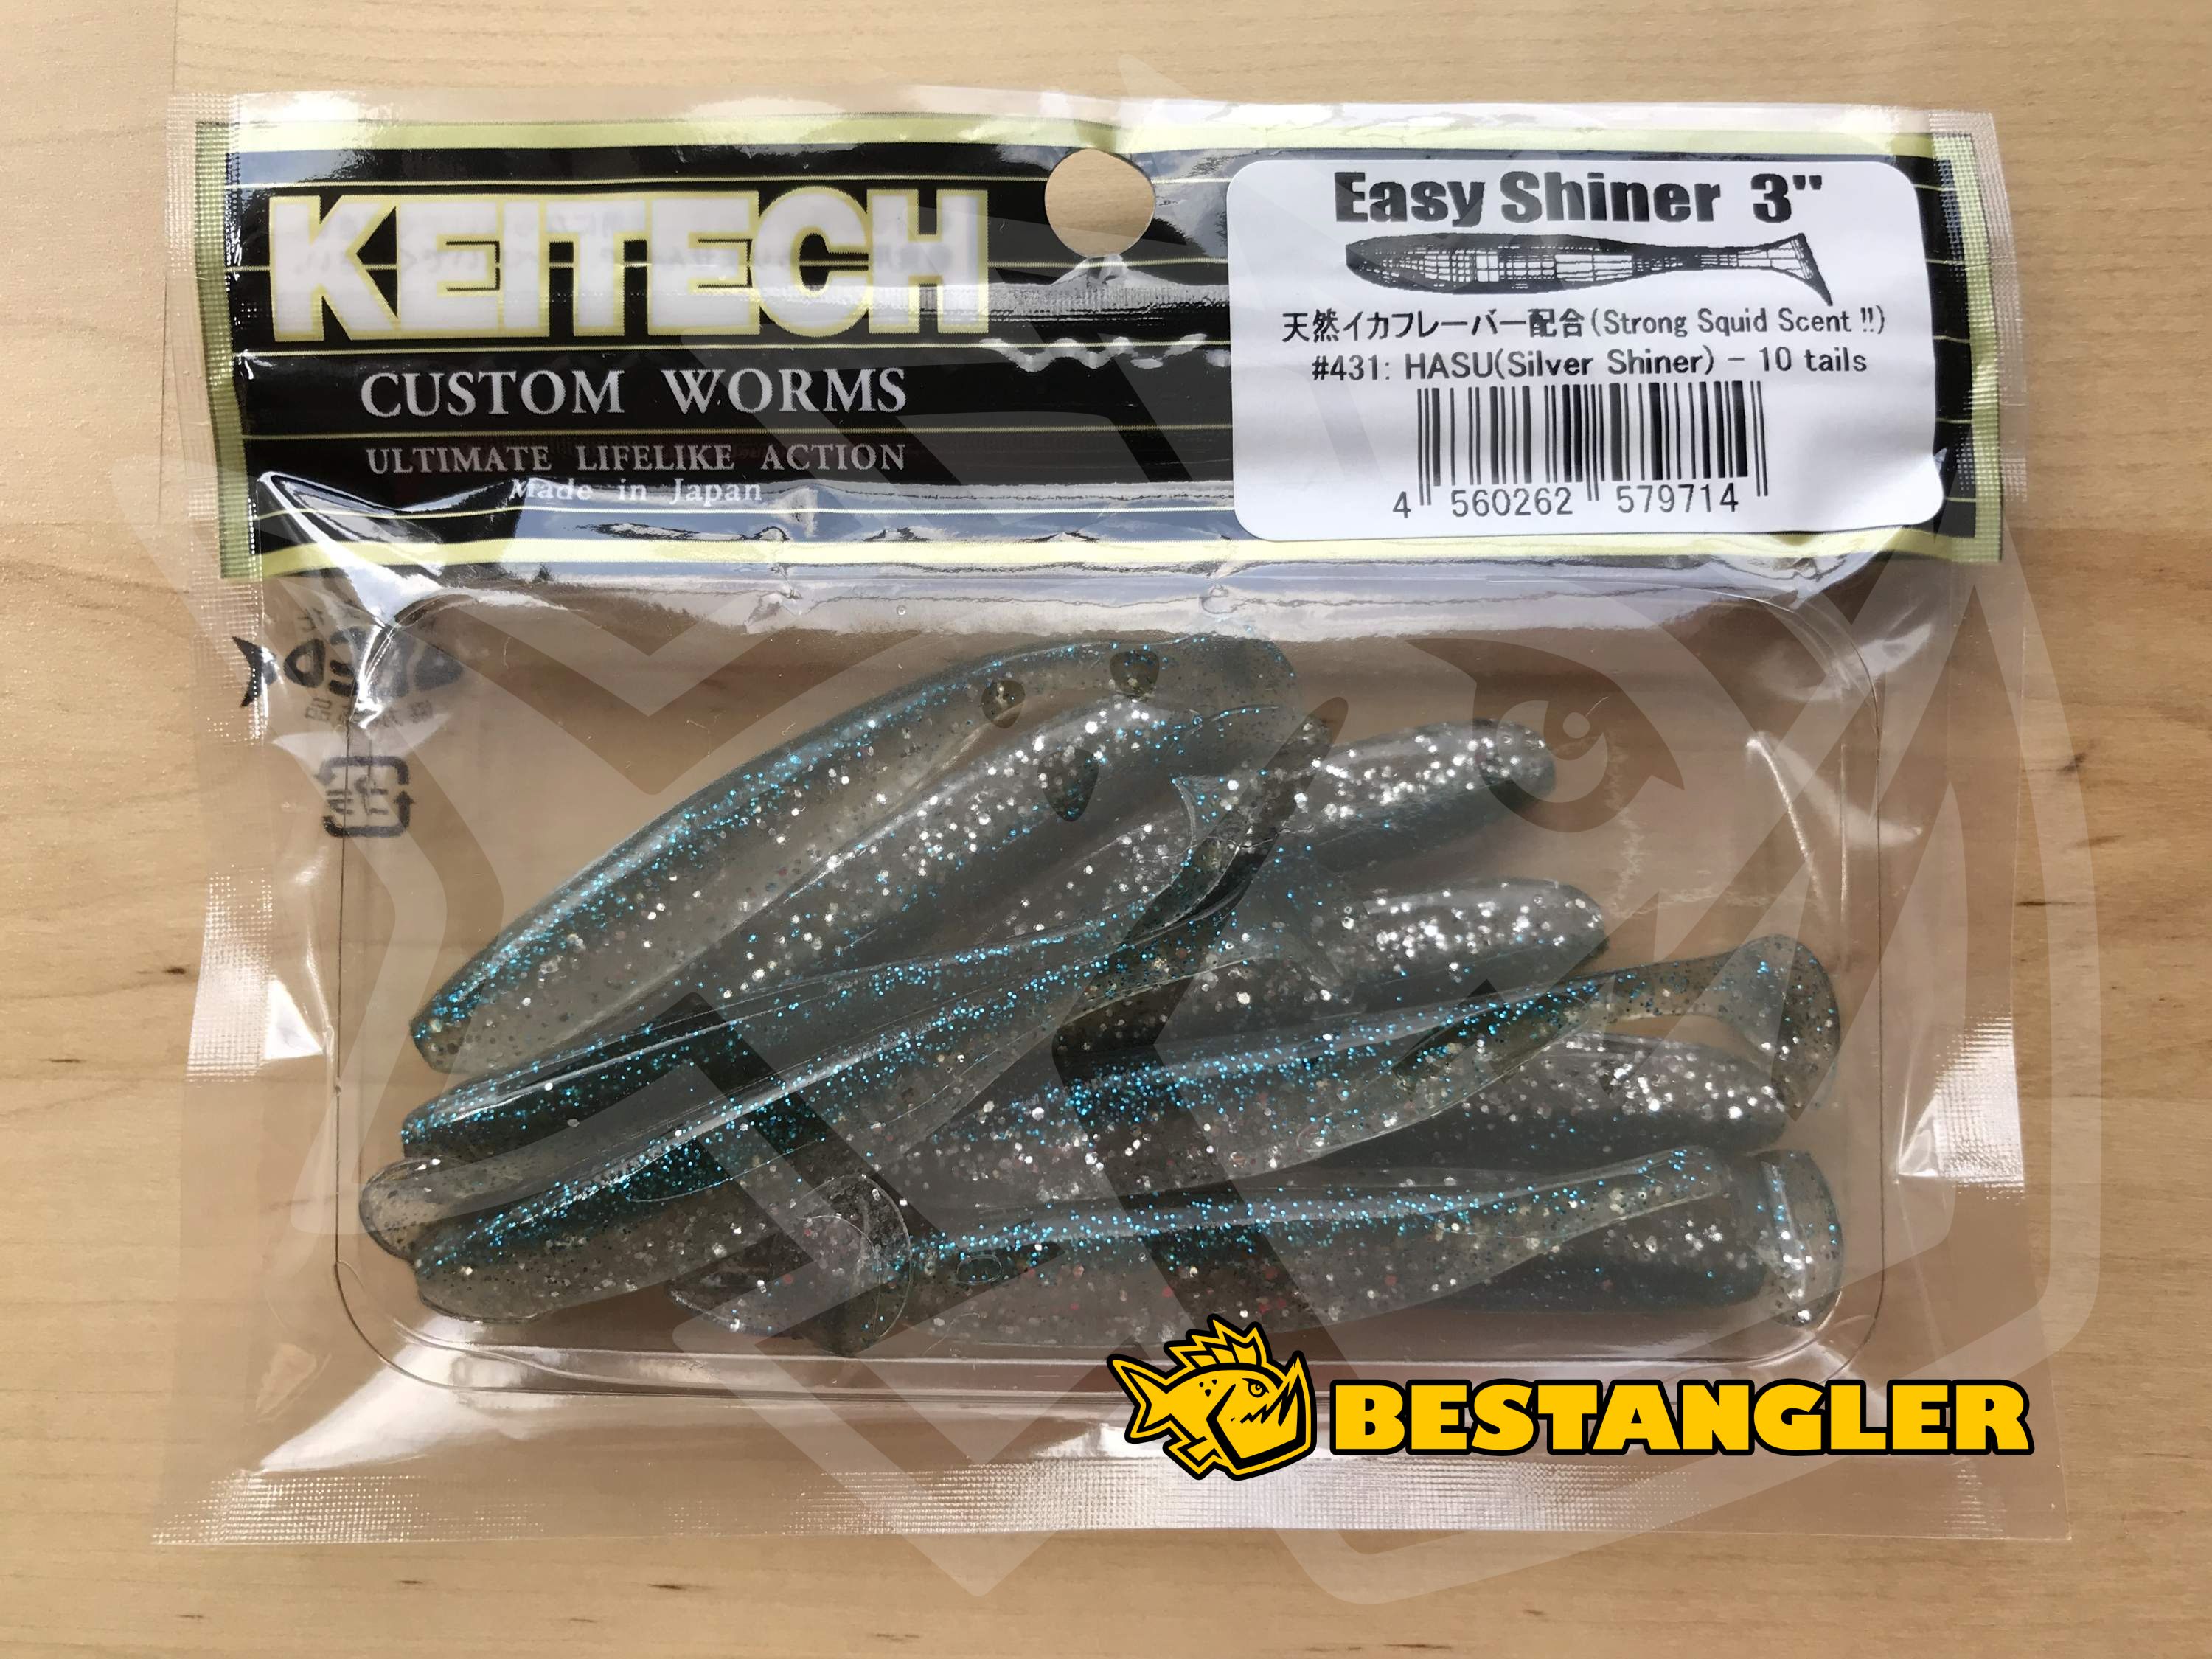 Keitech Easy Shiner 3" 